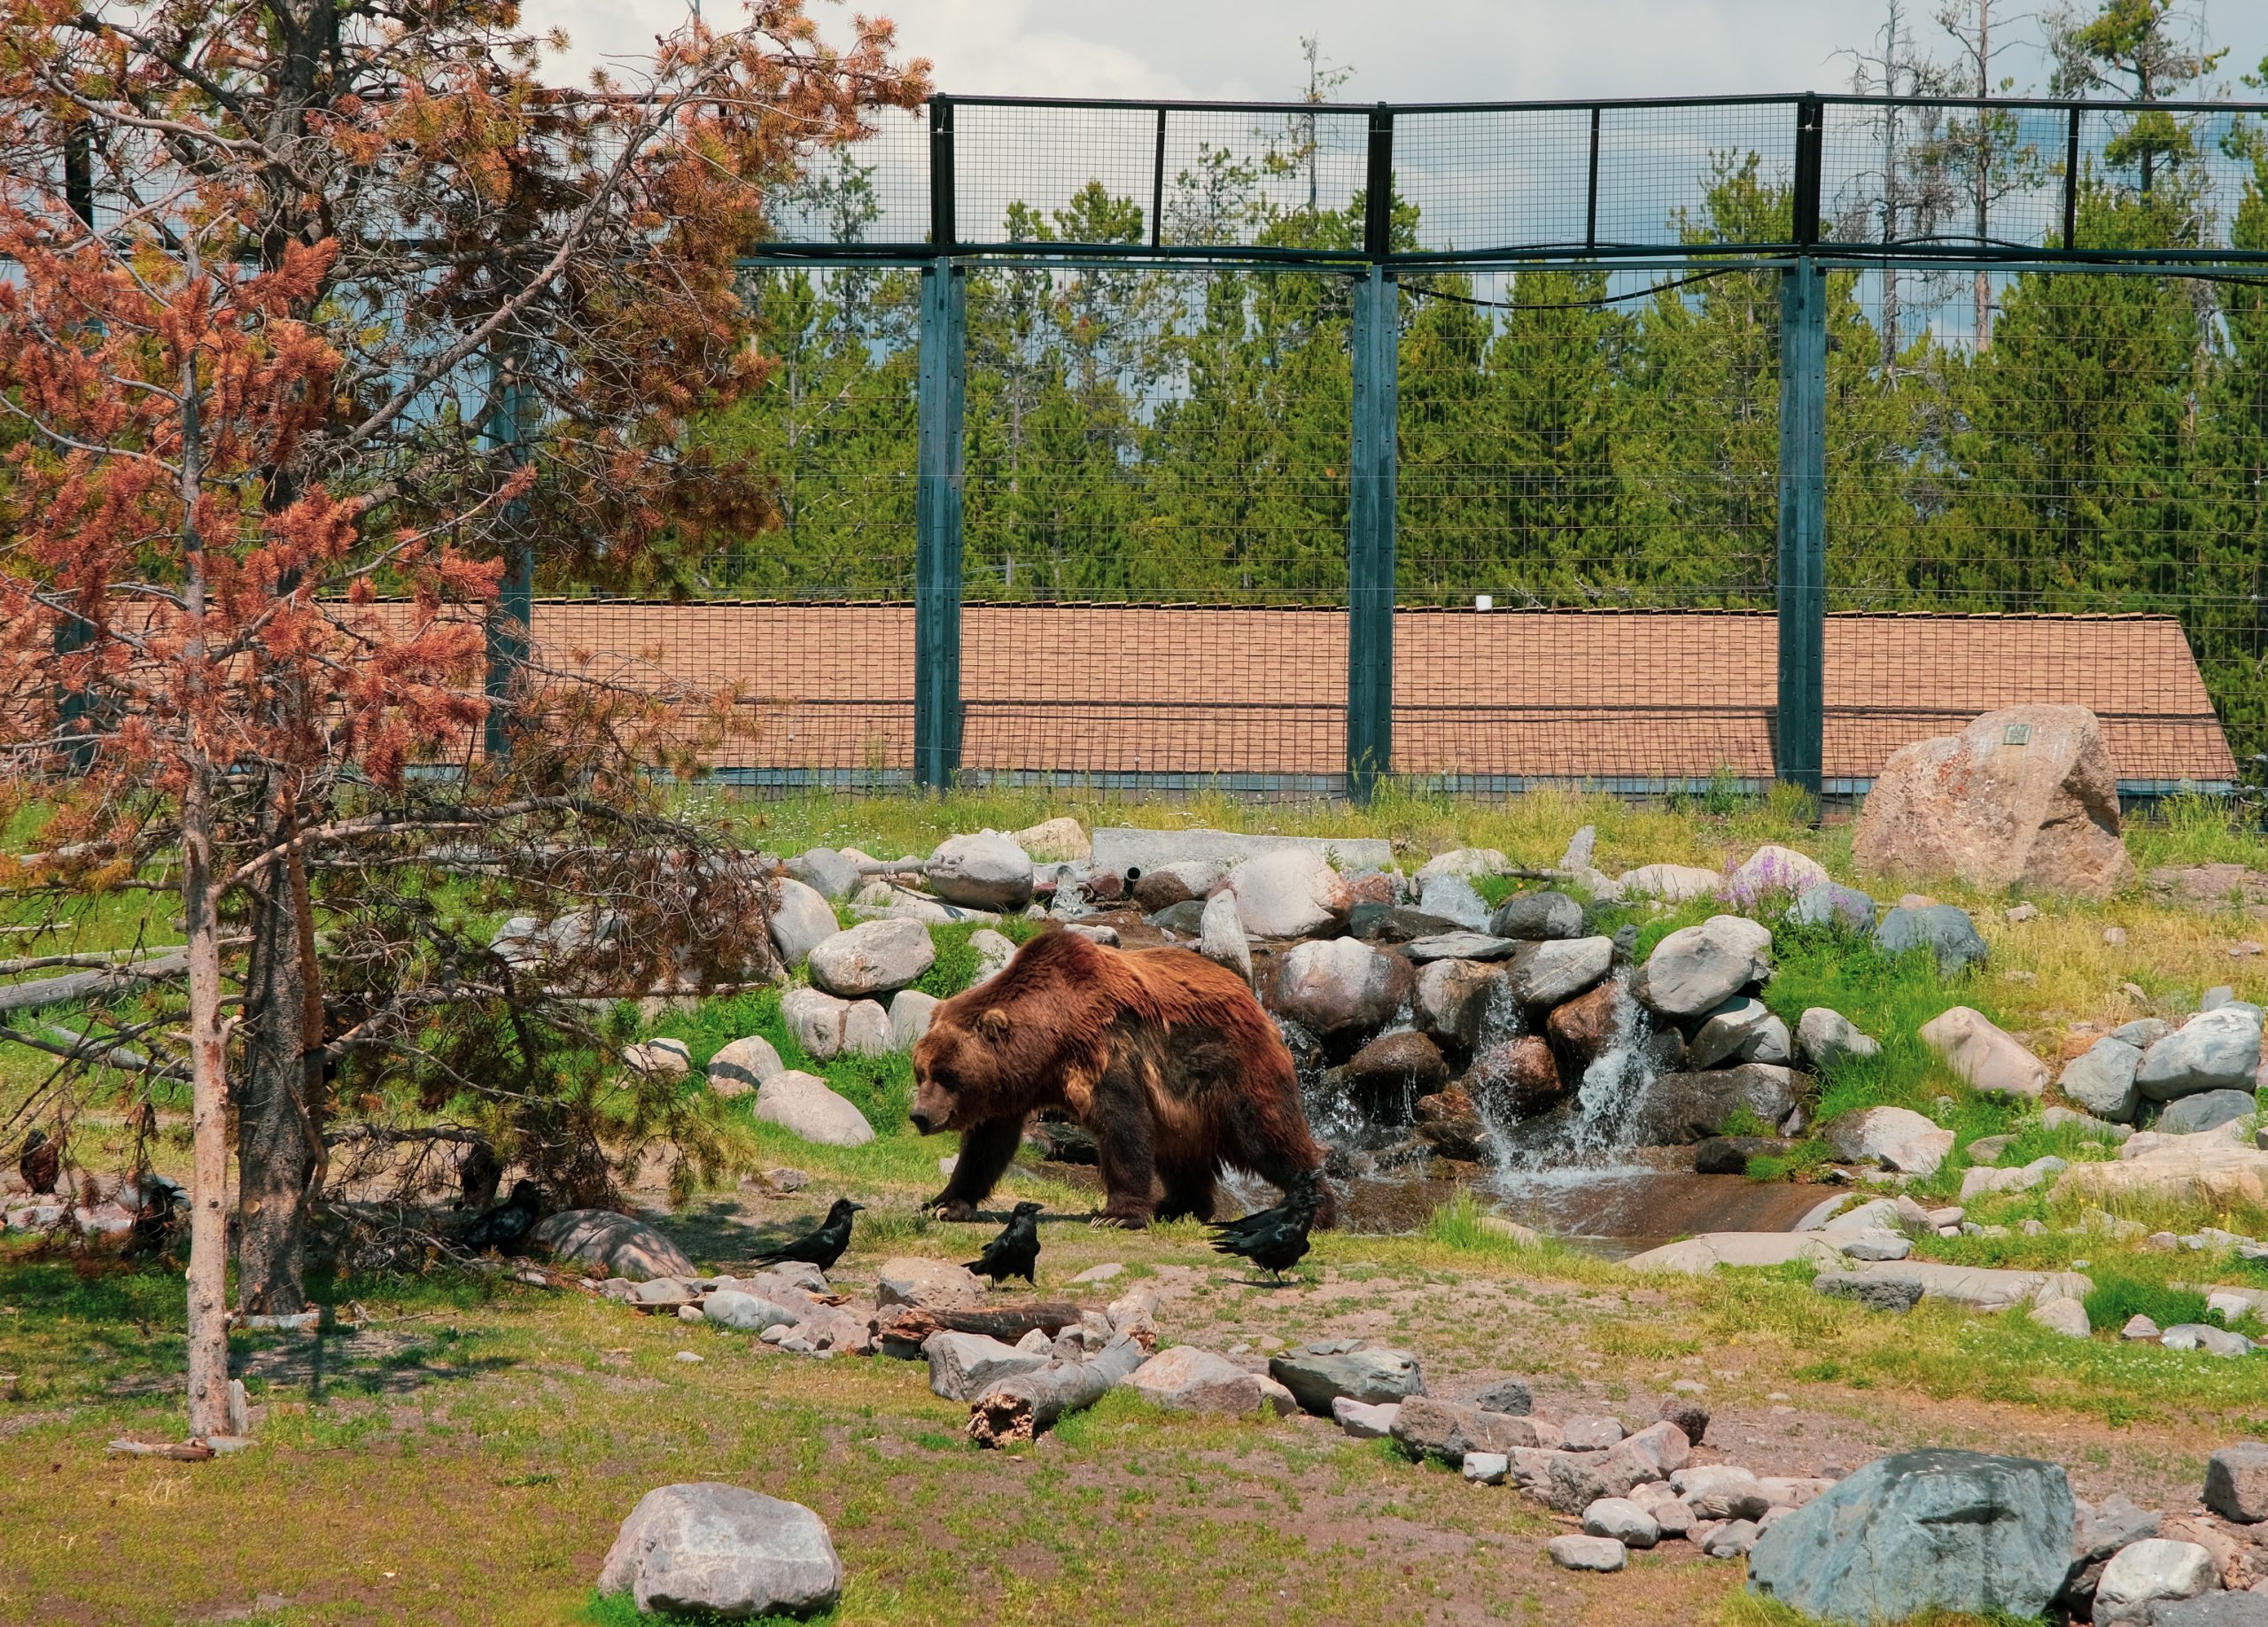 Der größte Grizzlybär im Grizzly and Wolf Discovery Center, dicke 475 Kilo Muskelkraft